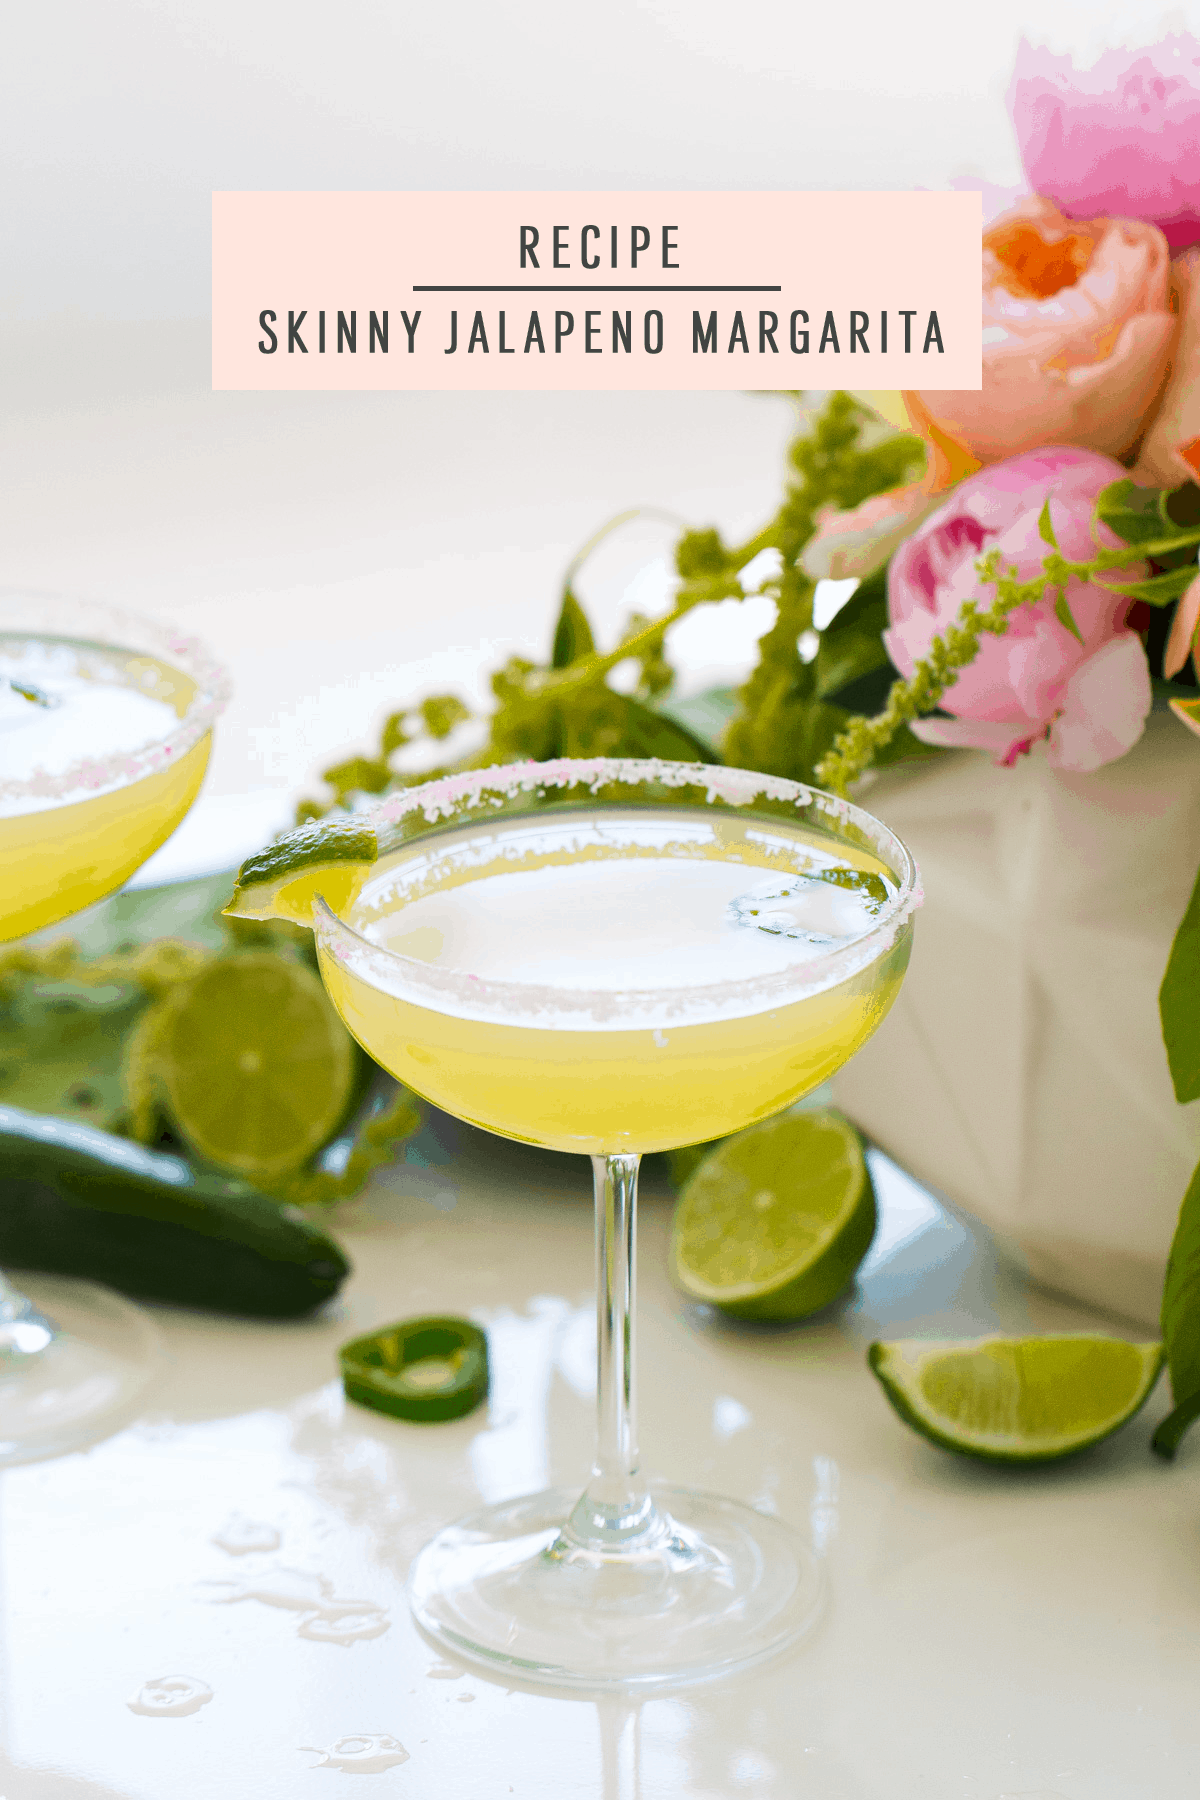 A Skinny Jalapeno Margarita recipe for Cinco de Mayo by top Houston lifestyle blogger Ashley Rose of Sugar & Cloth